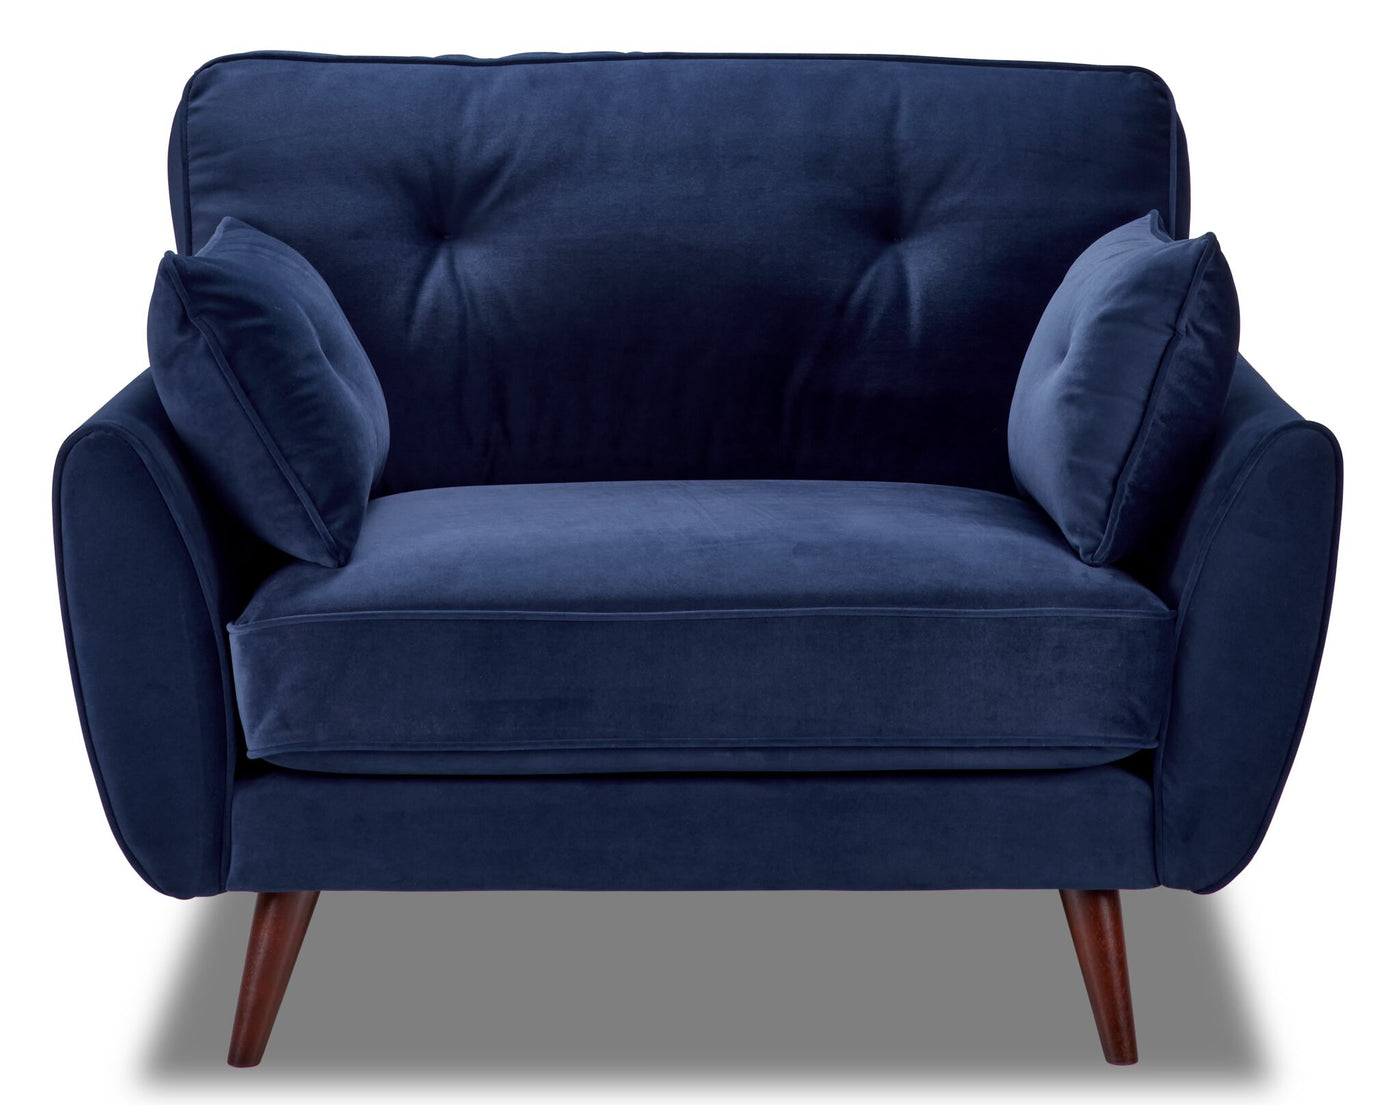 Mallory Chair - Blue